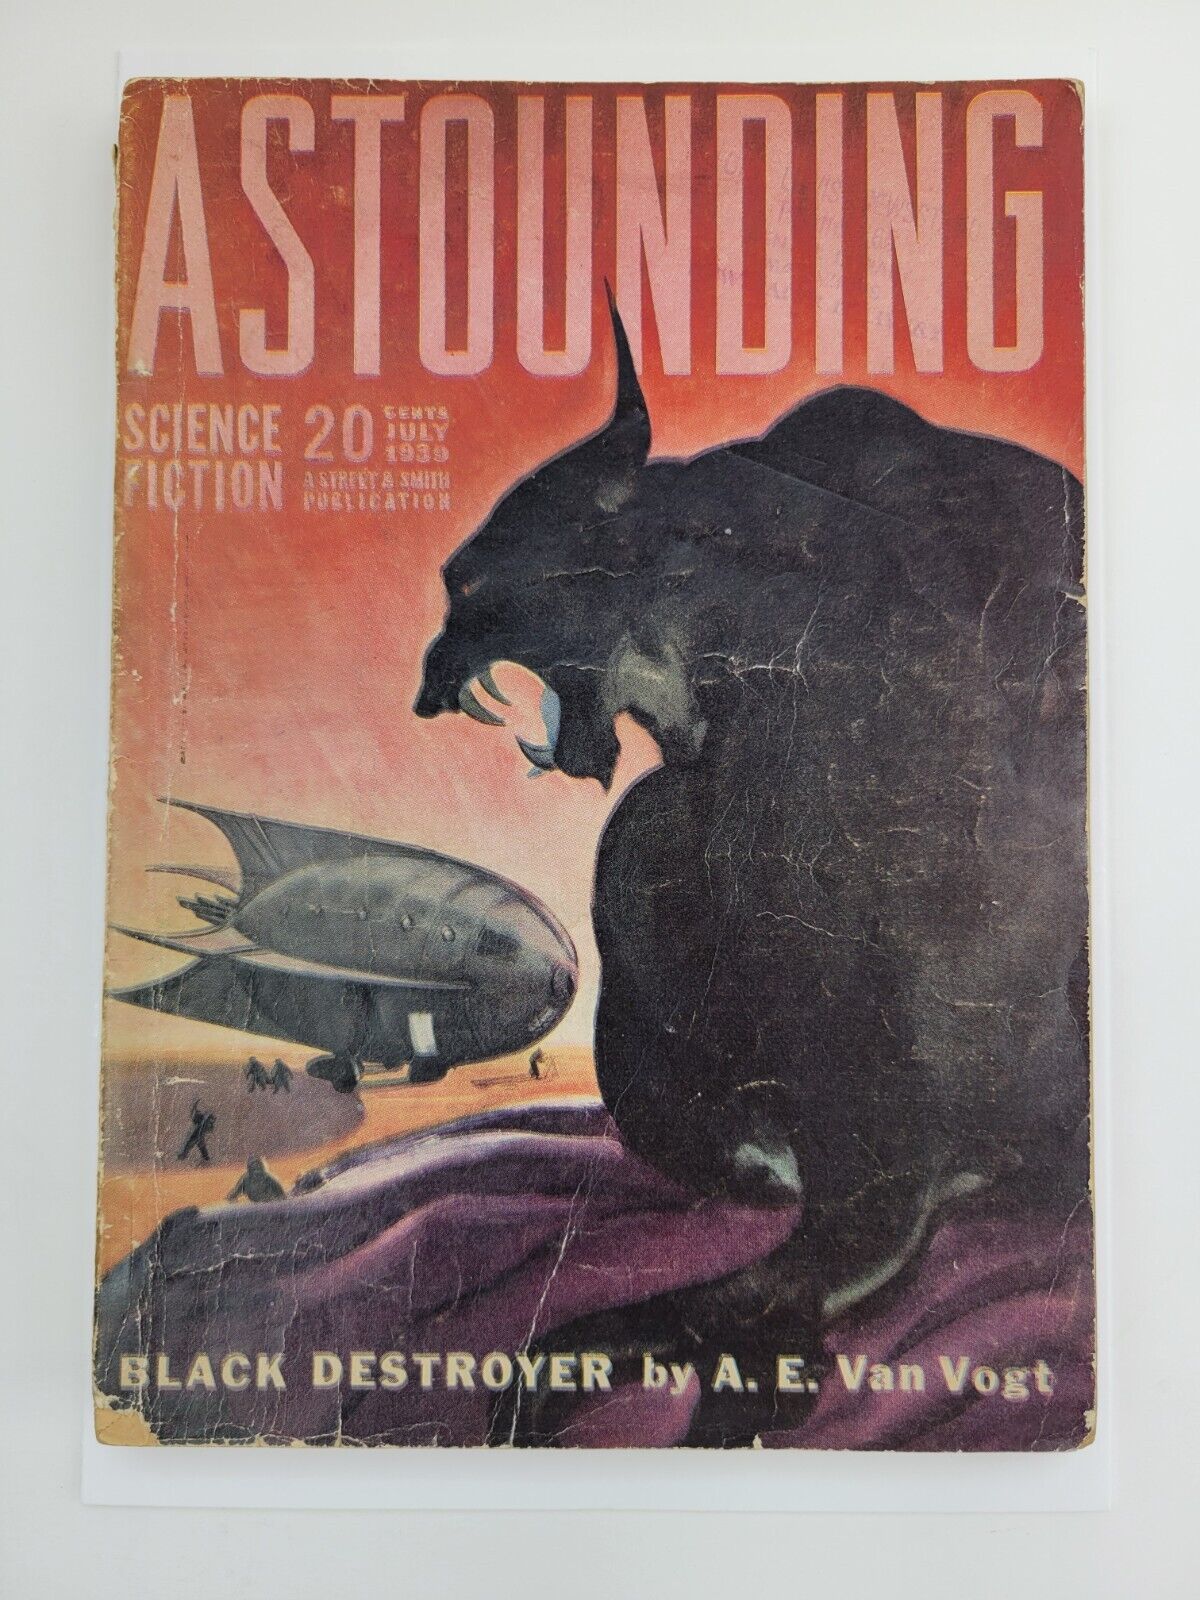 Astounding Science Fiction Pulp Magazine July 1939 \